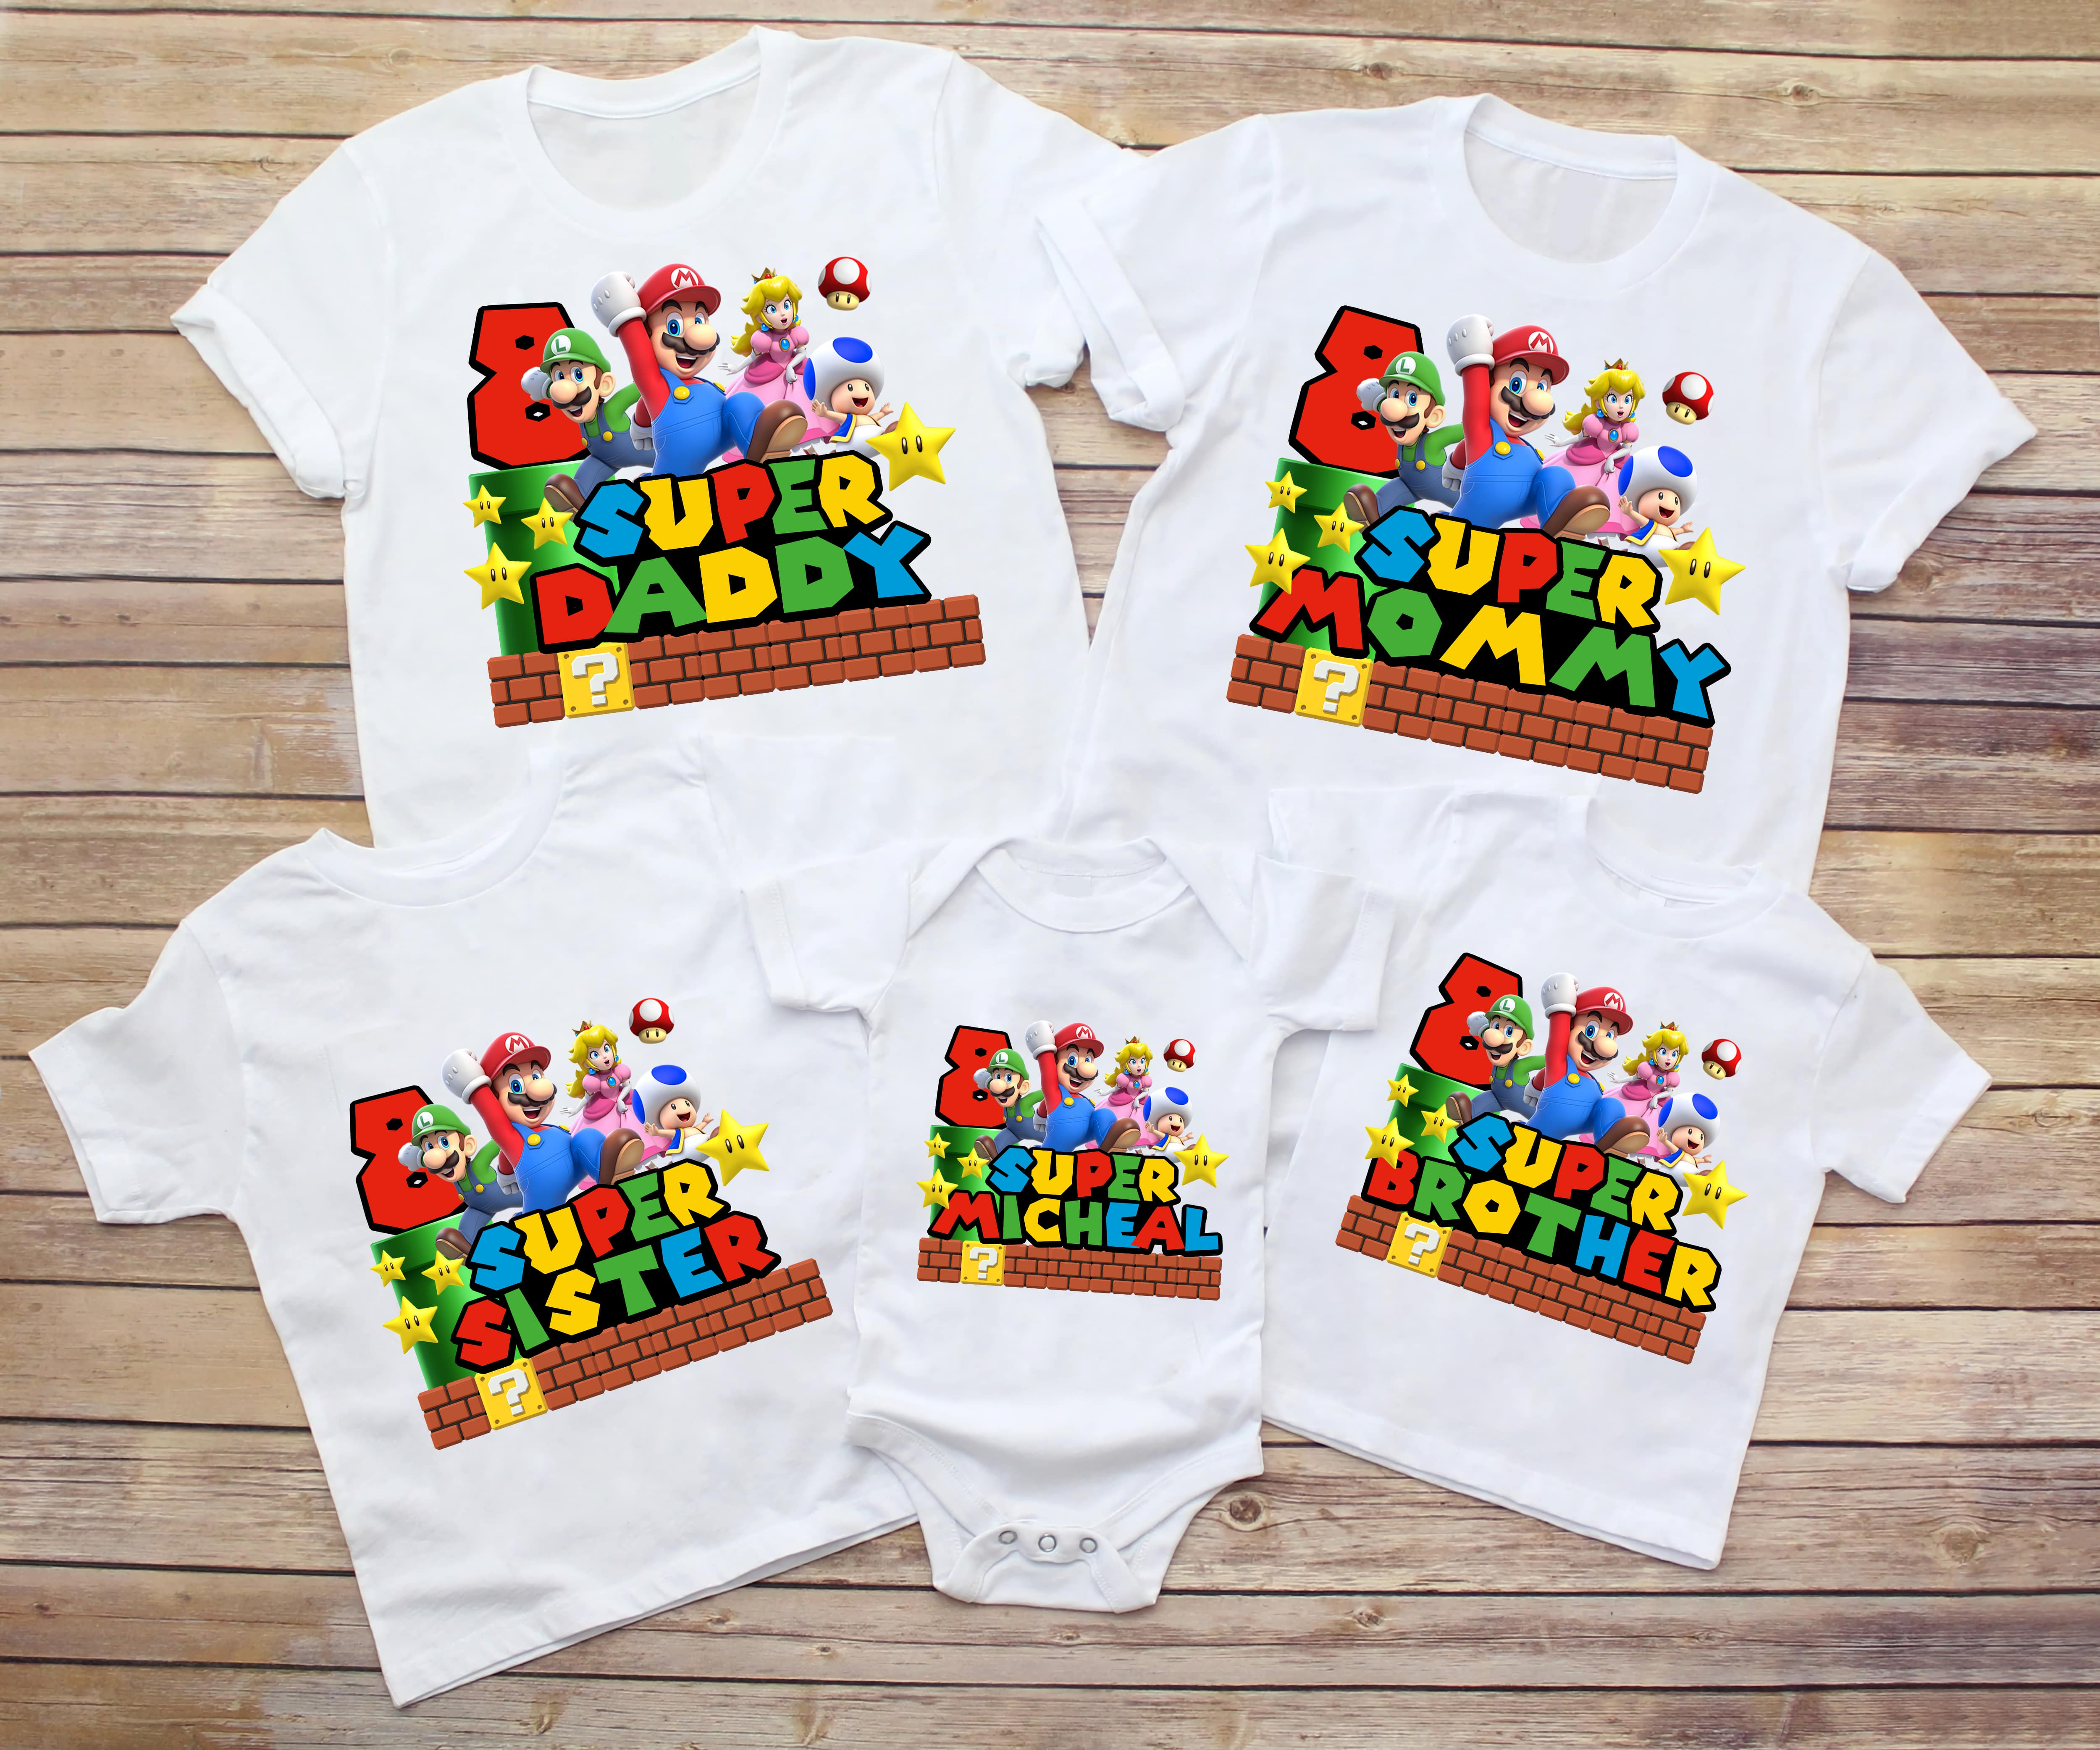 Super Mario Birthday Family custom shirts. Super Mario Birthday T-shirts. Mario Birthday T-shirts